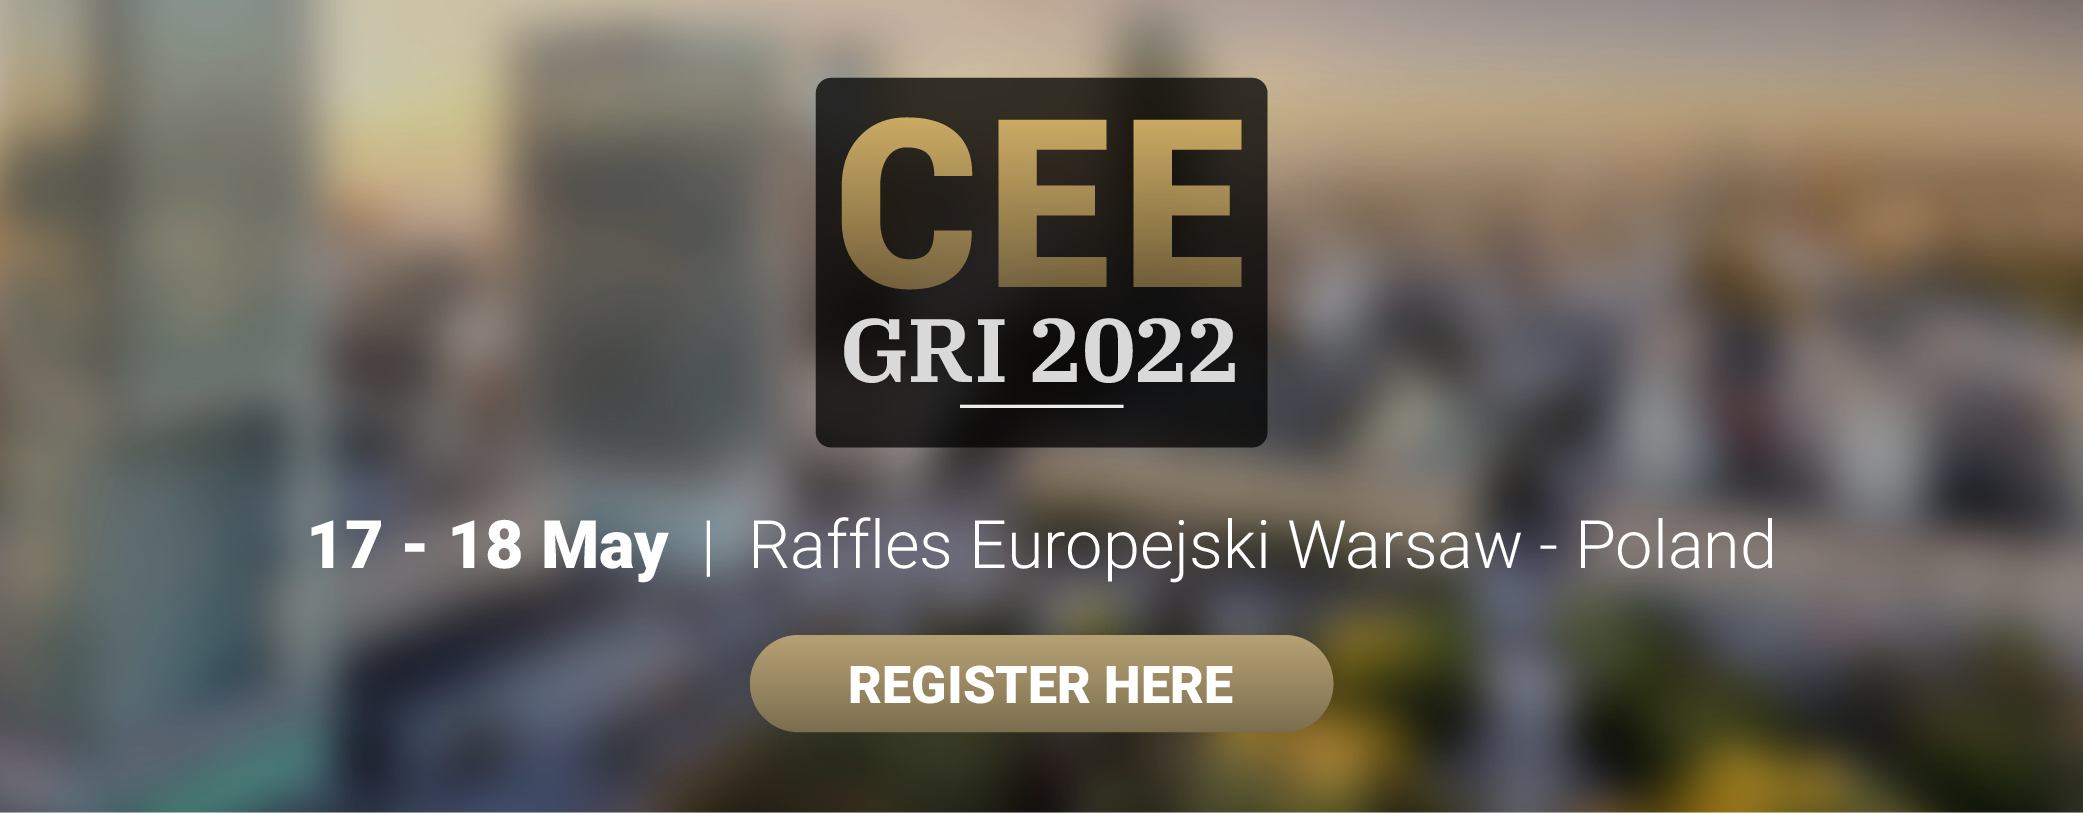 CEE GRI 2022 event 